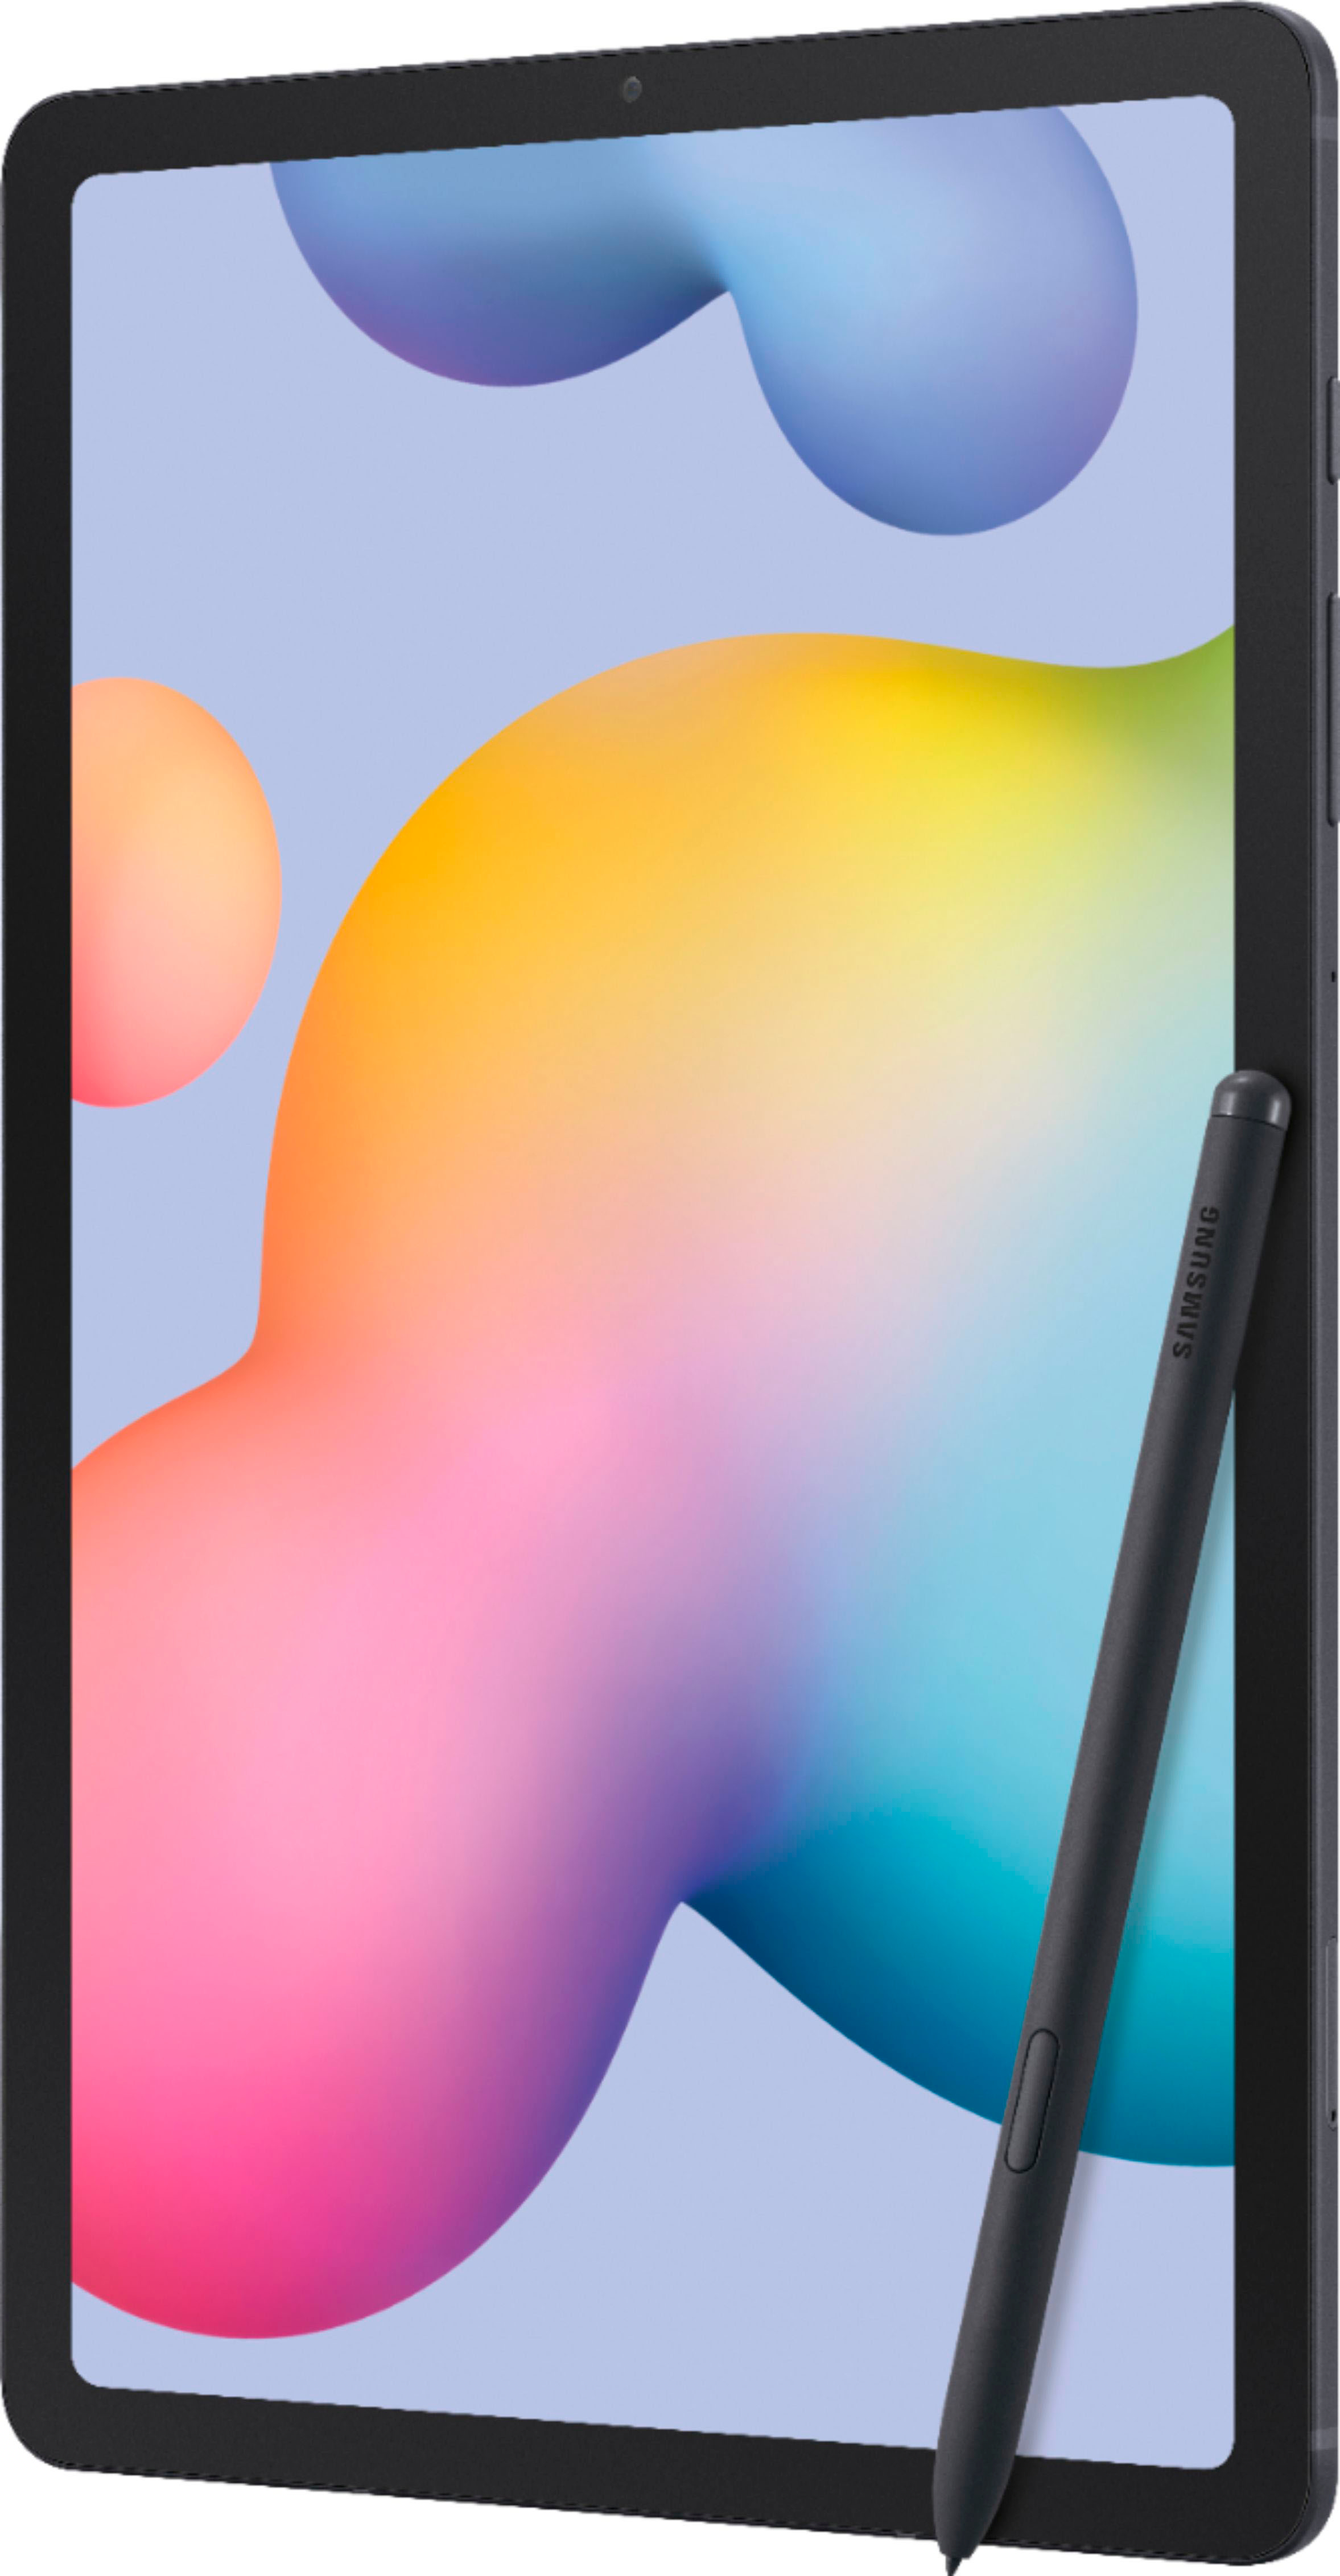 Samsung Galaxy Tab S6 Lite review - PhoneArena